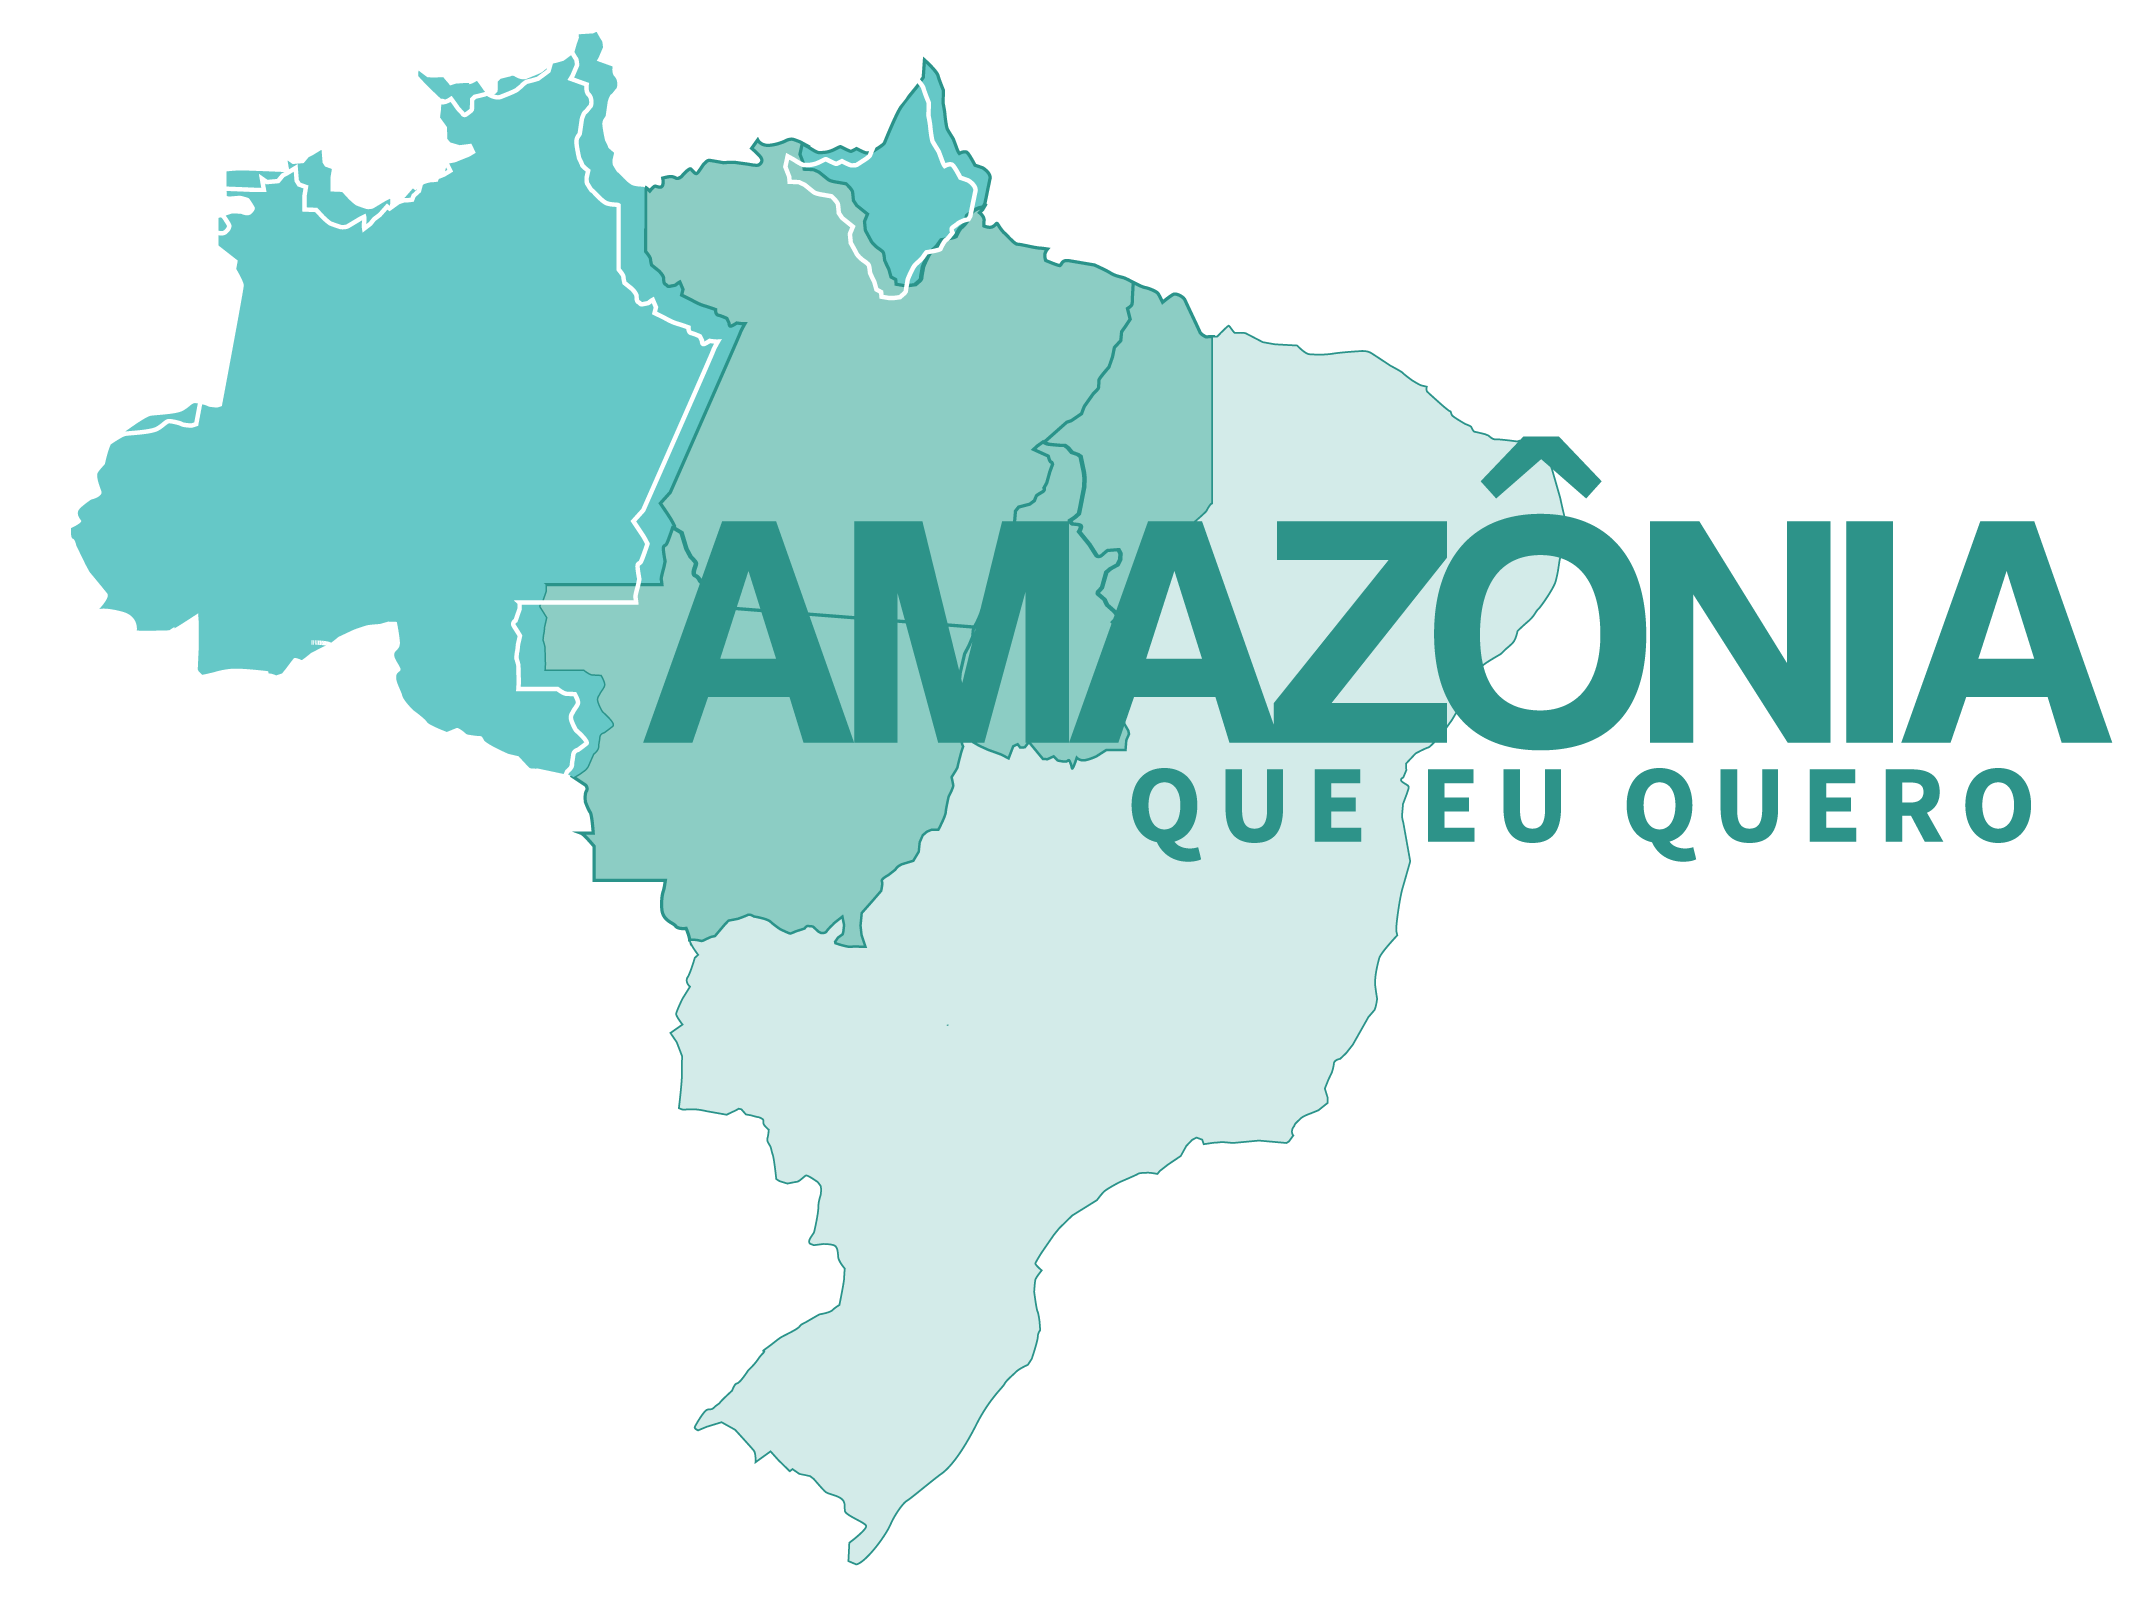 Portal Amazônia